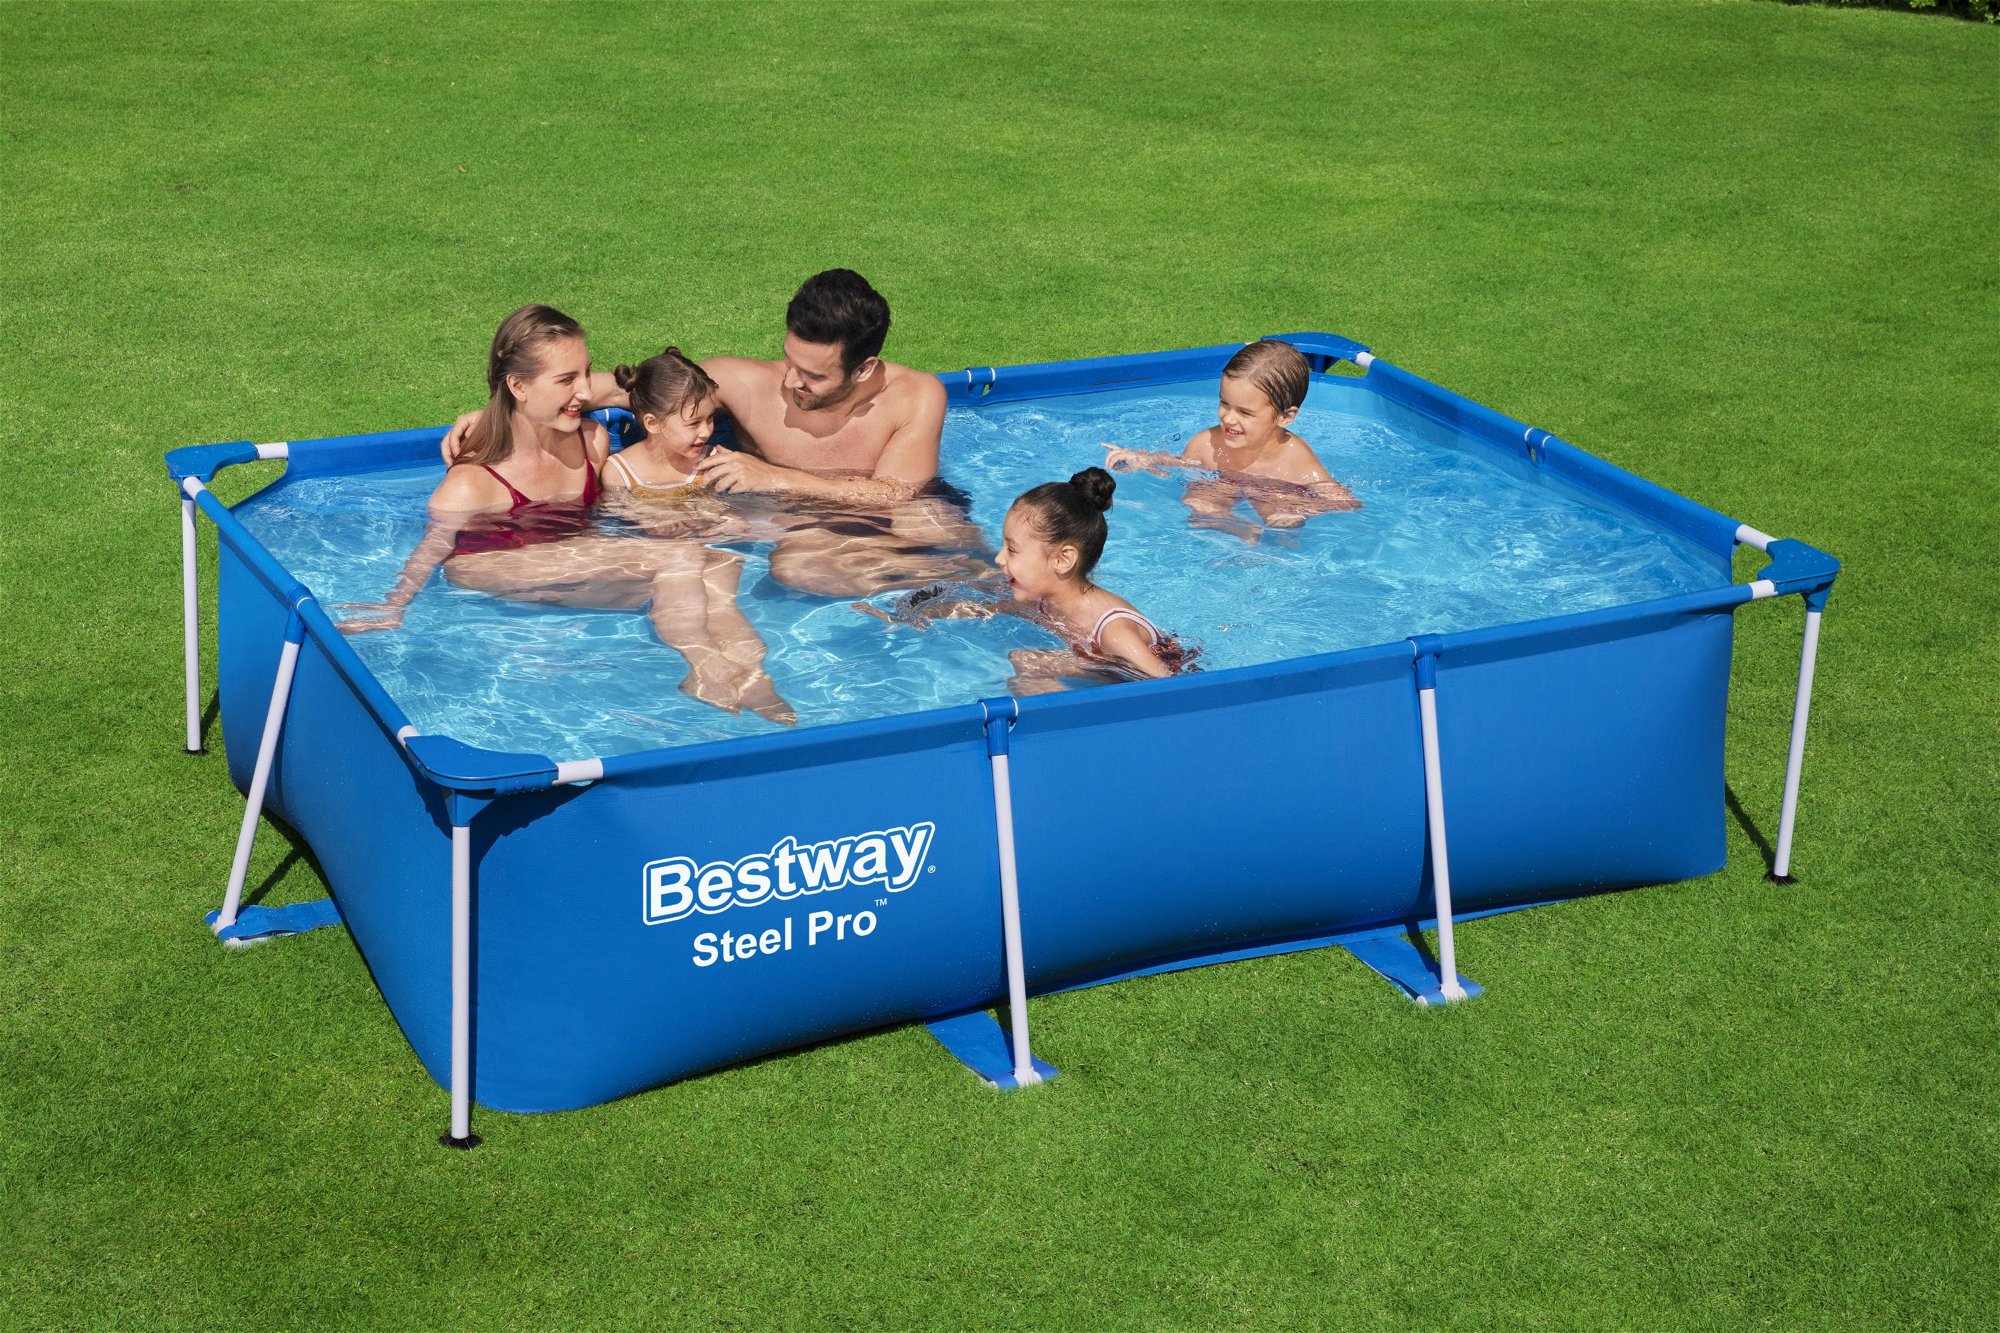 Bestway Pool Steel Pro, eckig, blau, ohne Zubehör 259 x 170 x 61 cm SW:10010.1